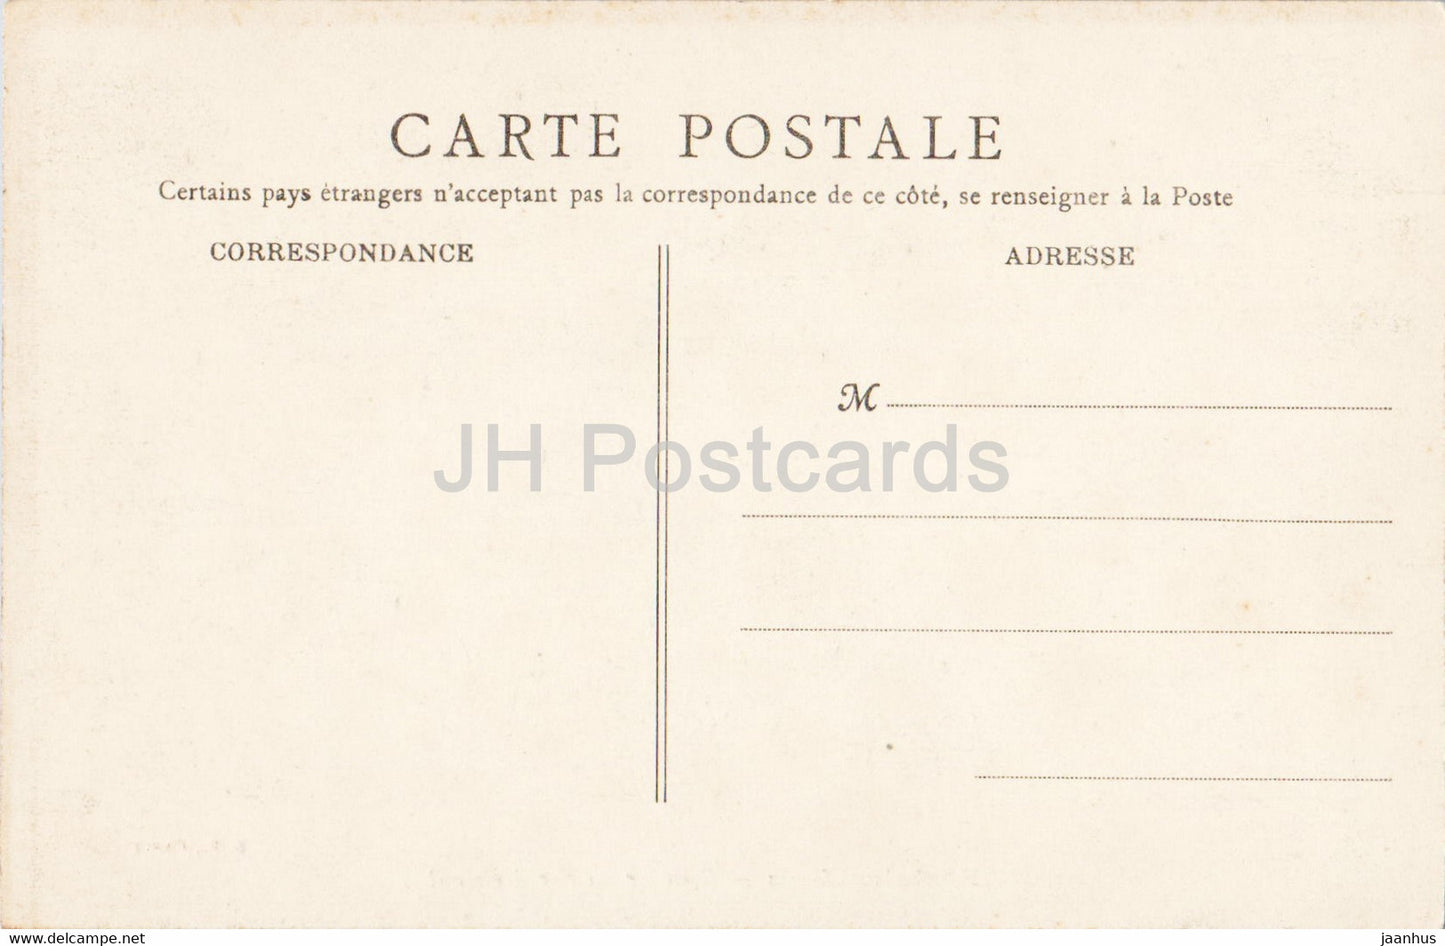 Fontainebleau - Escalier du Fer a cheval - old postcard - 1908 - France - unused